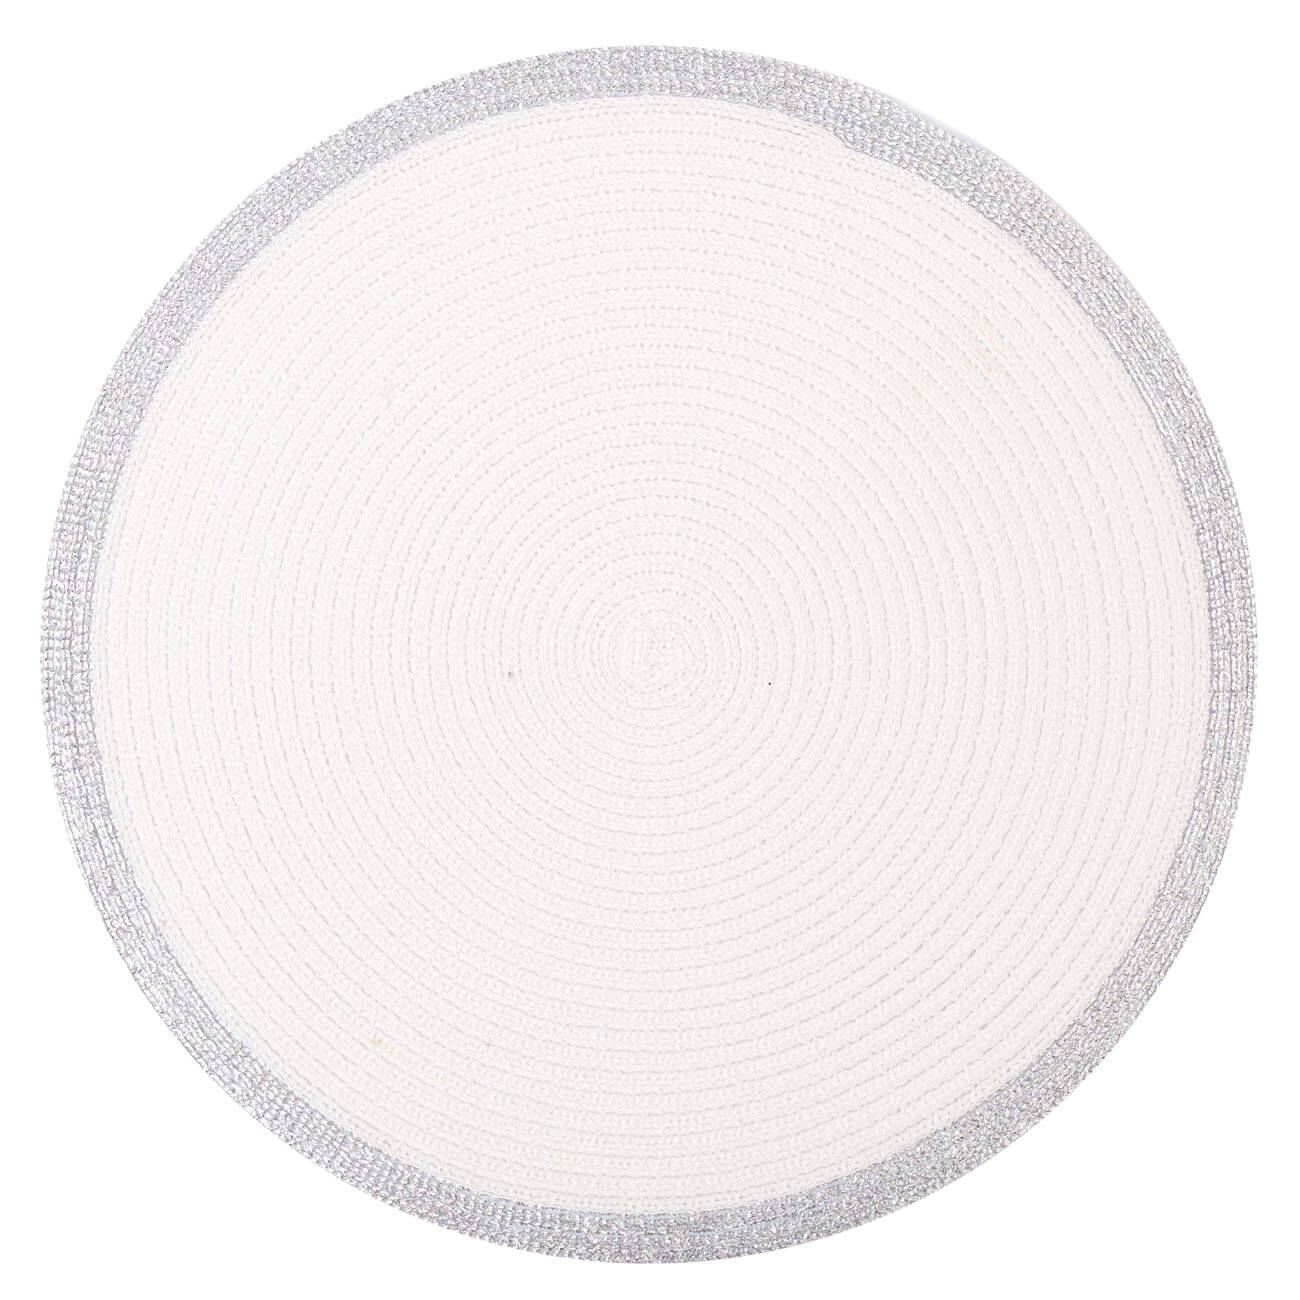 Kuchenland Салфетка под приборы, 38 см, полиэстер, круглая, белая, Серебристая кайма, Rotary rim